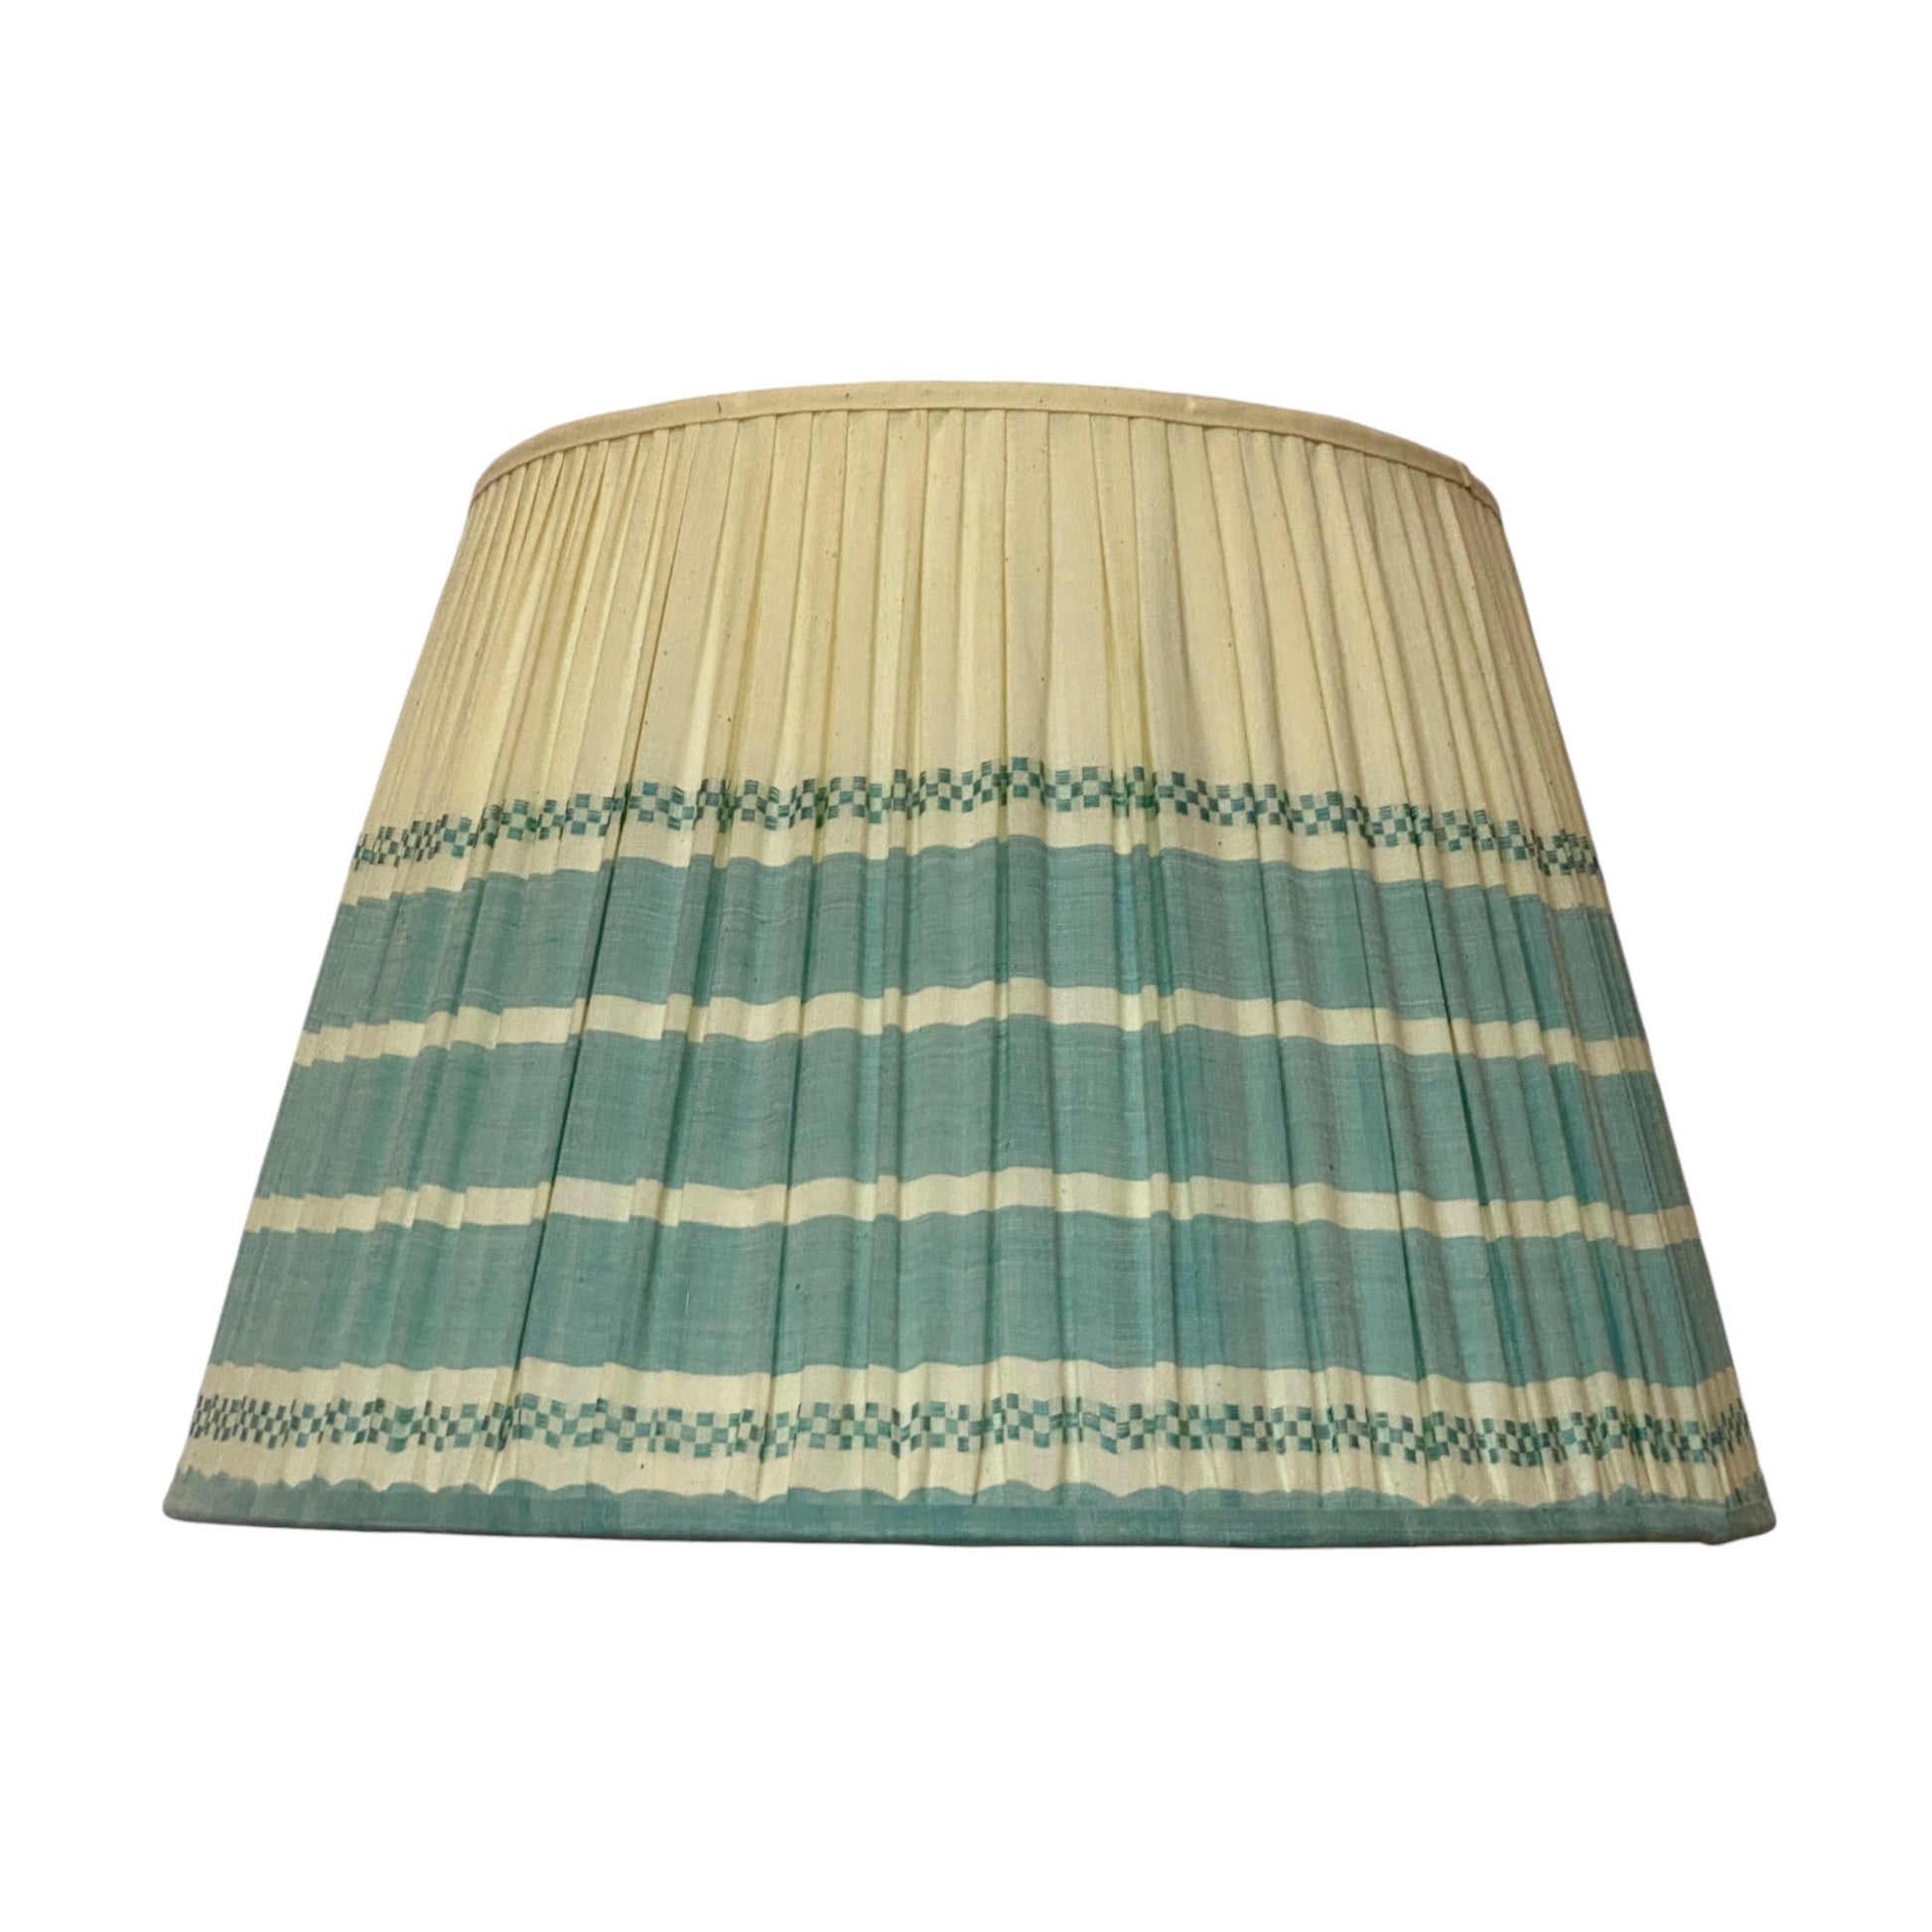 Blue Assam cotton lampshade